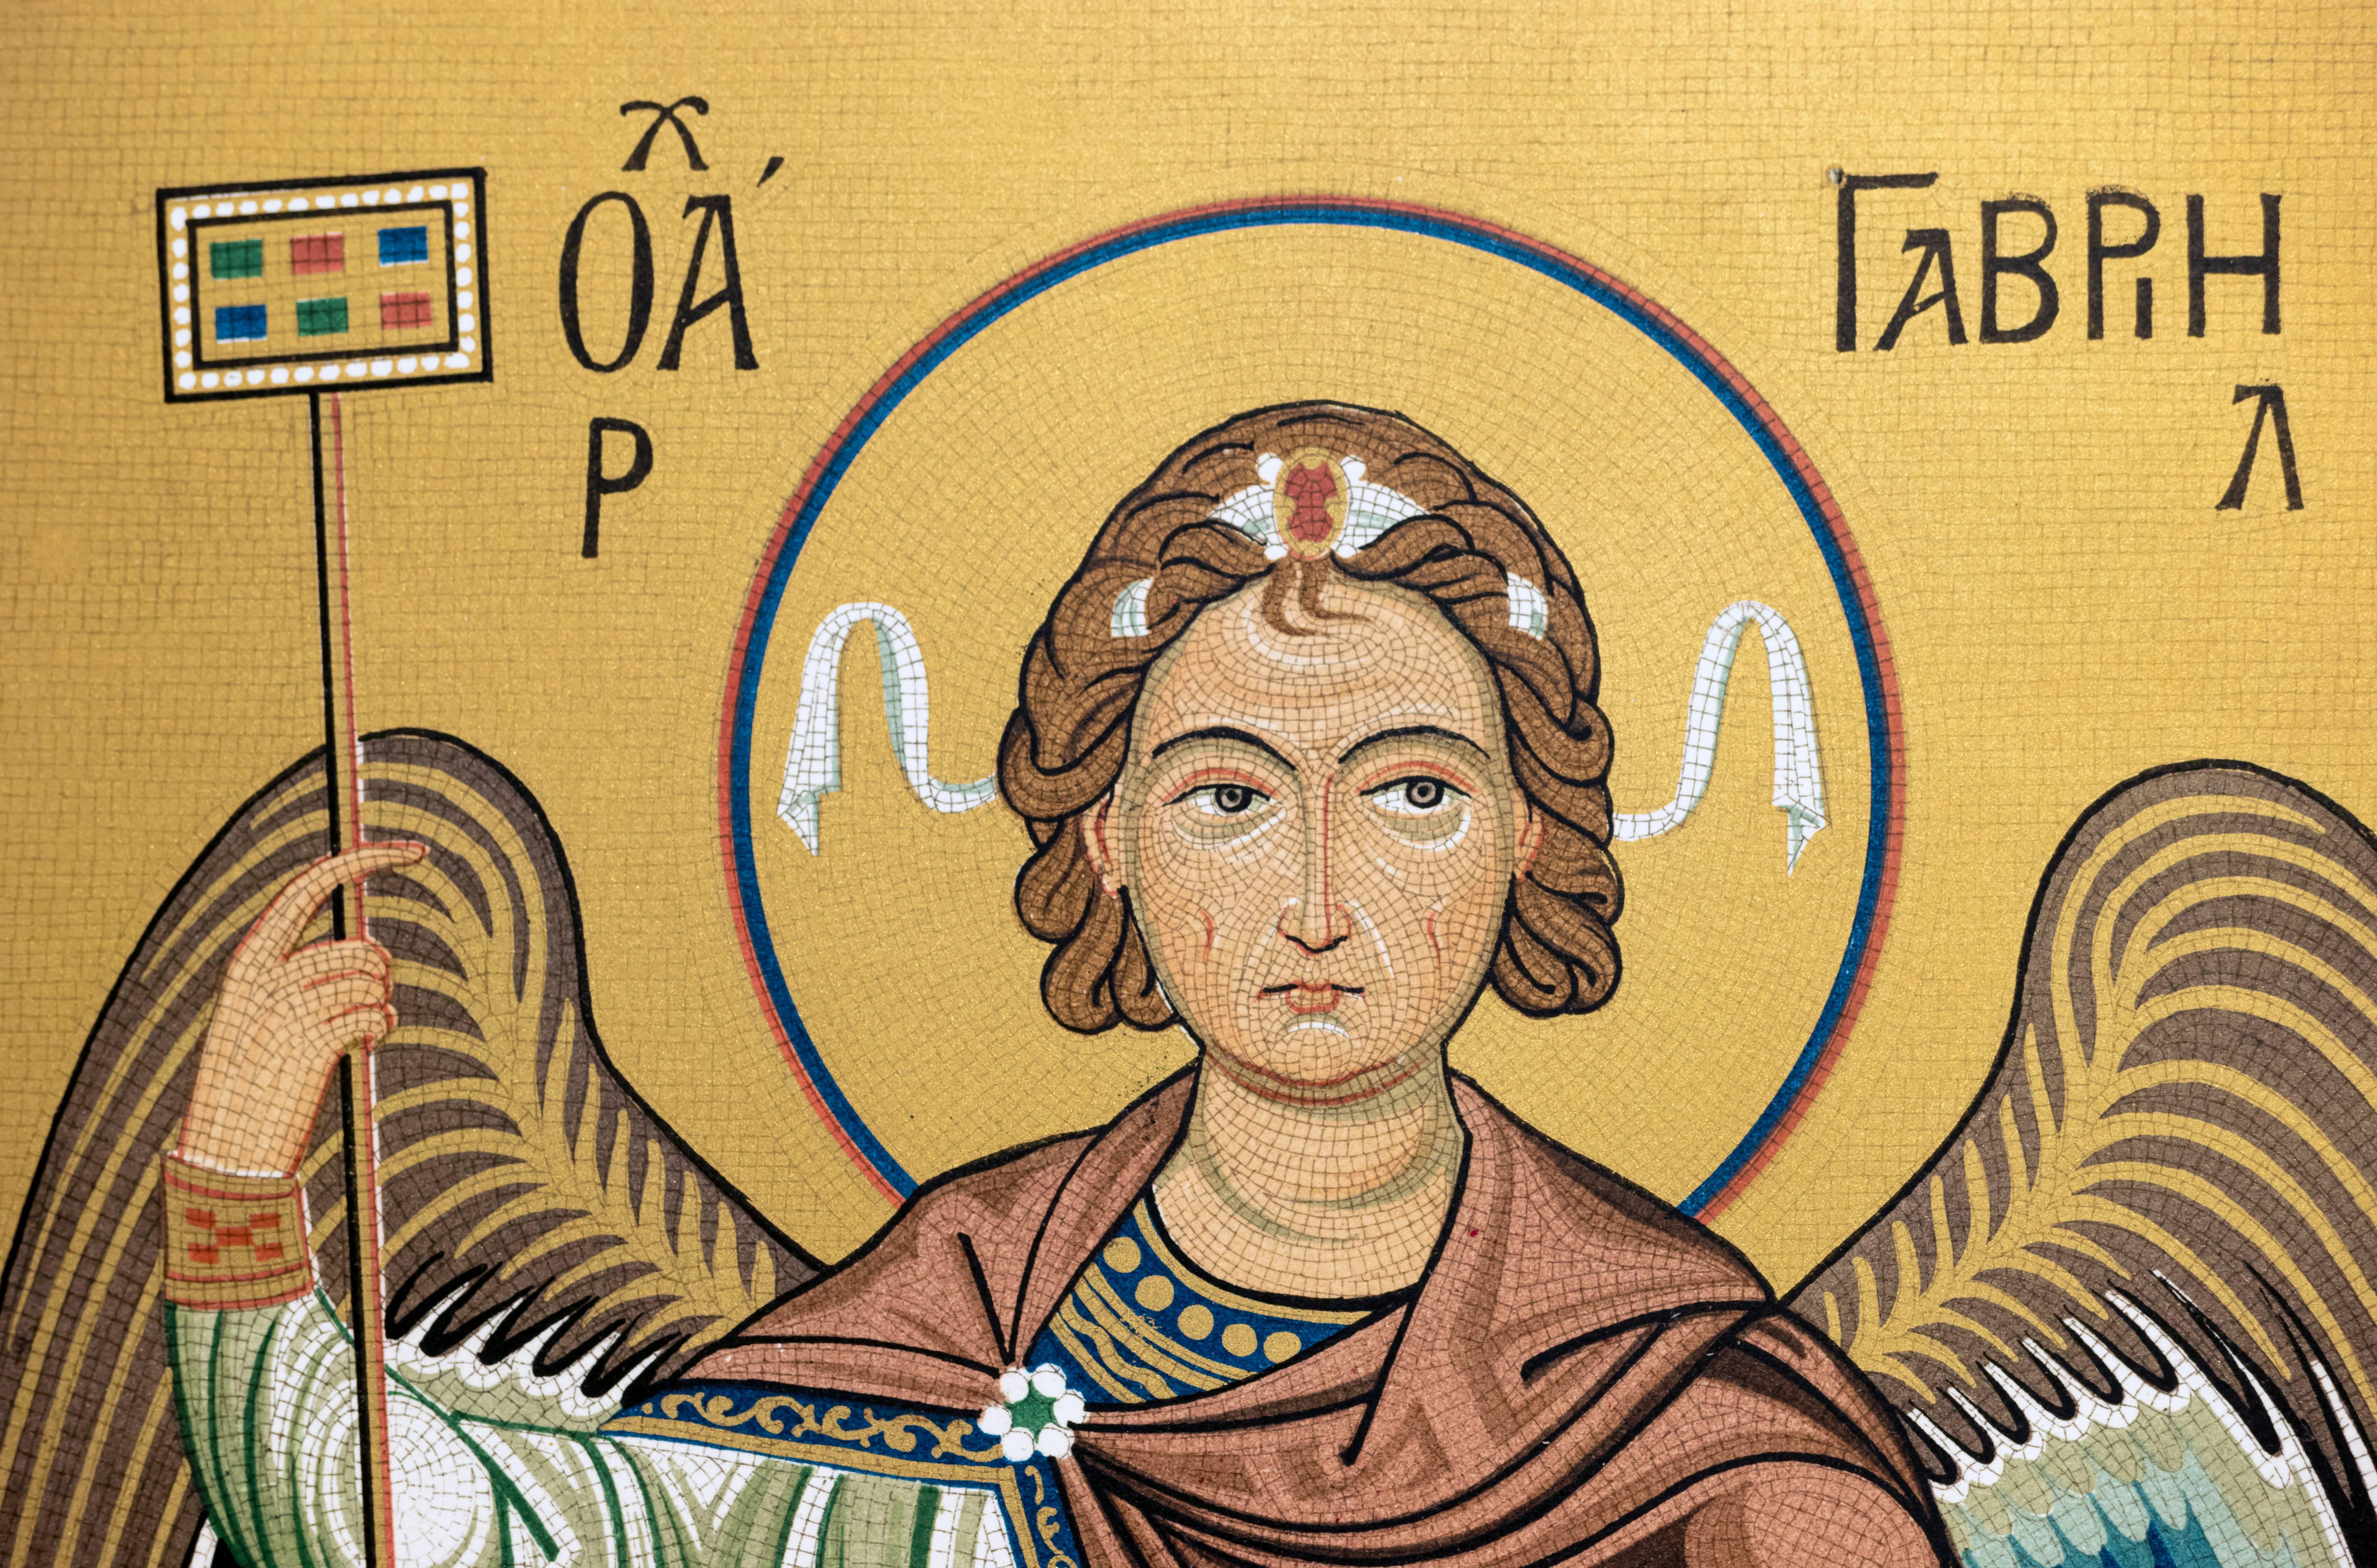 Byzantine Mosaic Angel Litho - Print by Unknown